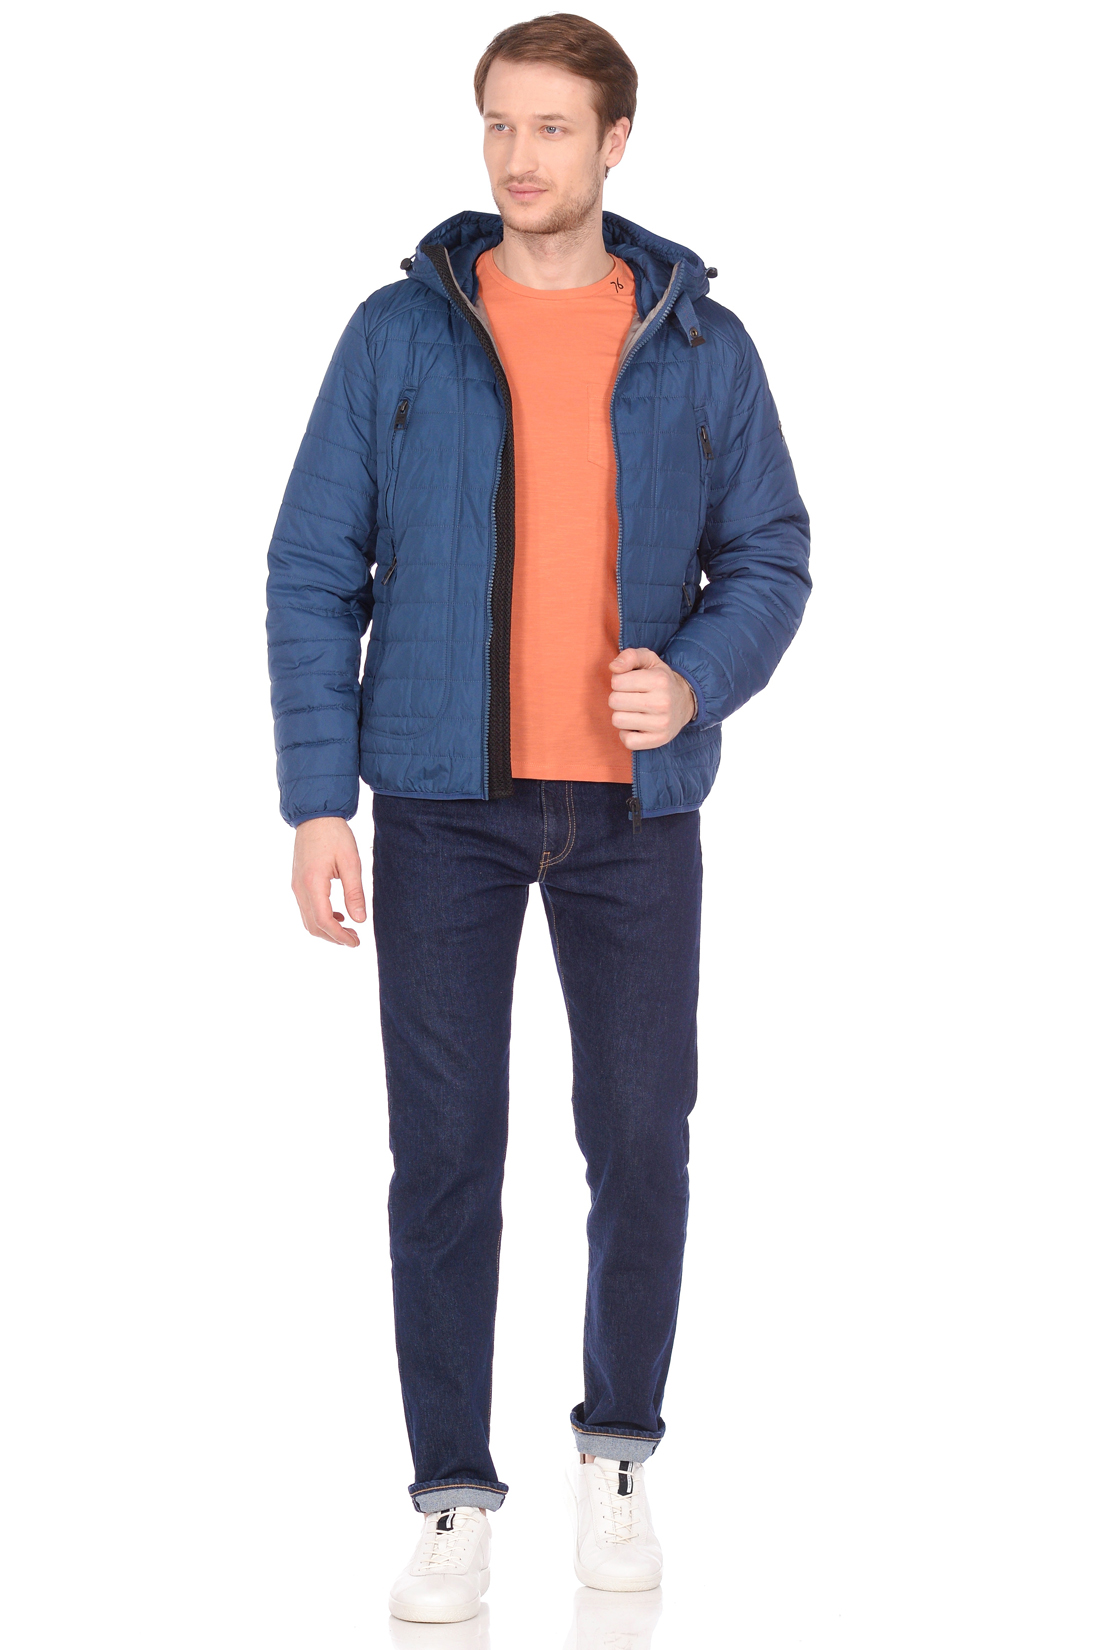 Куртка с двумя линиями карманов (арт. baon B539007), размер XXL, цвет синий Куртка с двумя линиями карманов (арт. baon B539007) - фото 4